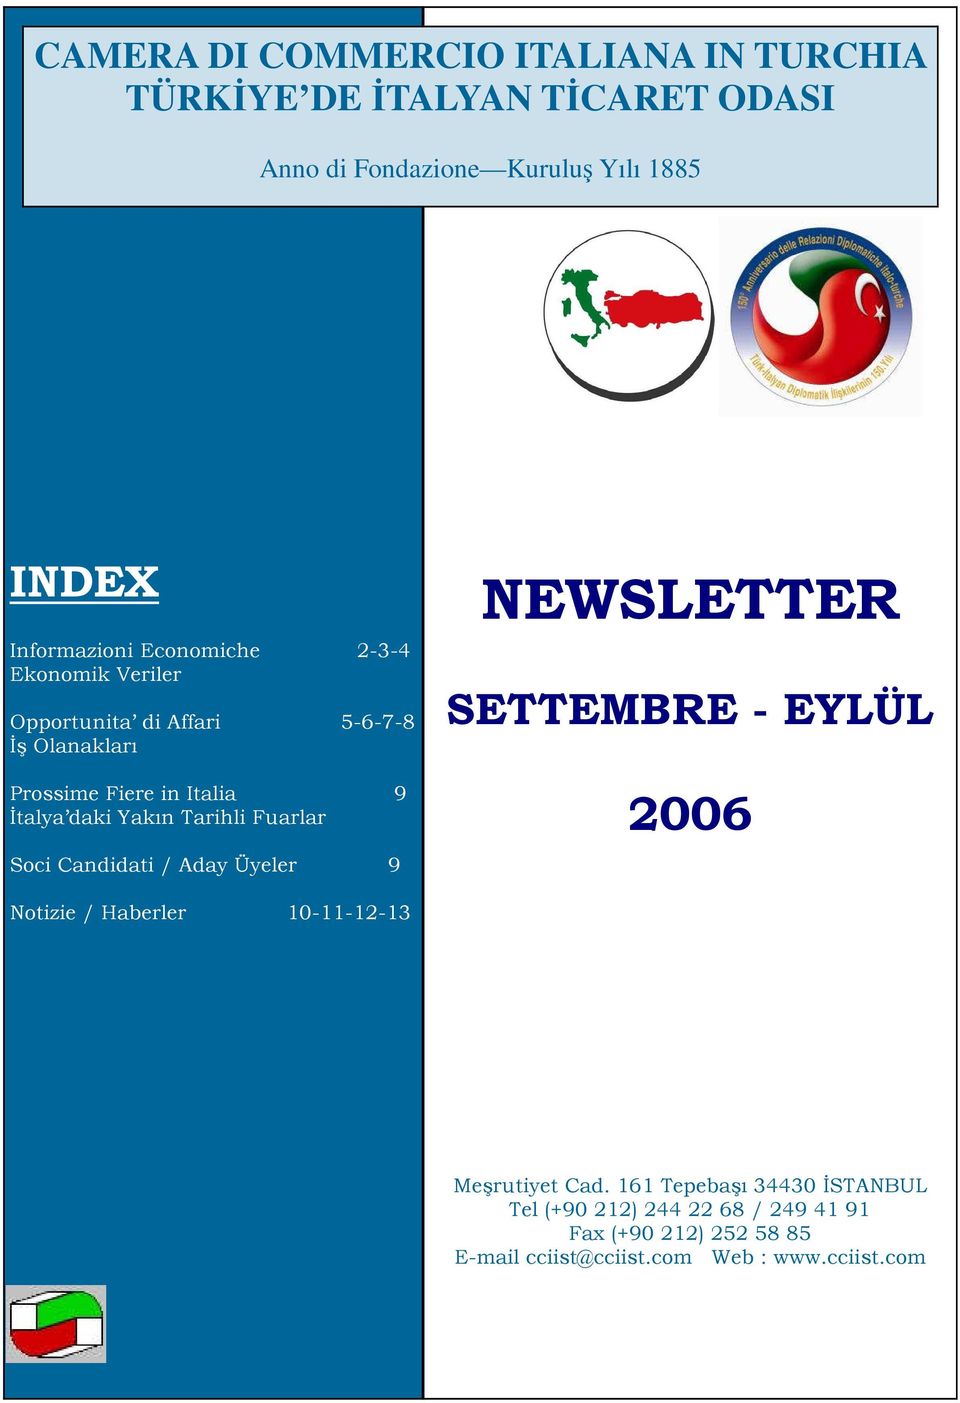 Tarihli Fuarlar Soci Candidati / Aday Üyeler 9 NEWSLETTER SETTEMBRE - EYLÜL 2006 Notizie / Haberler 10-11-12-13 CONTENTS